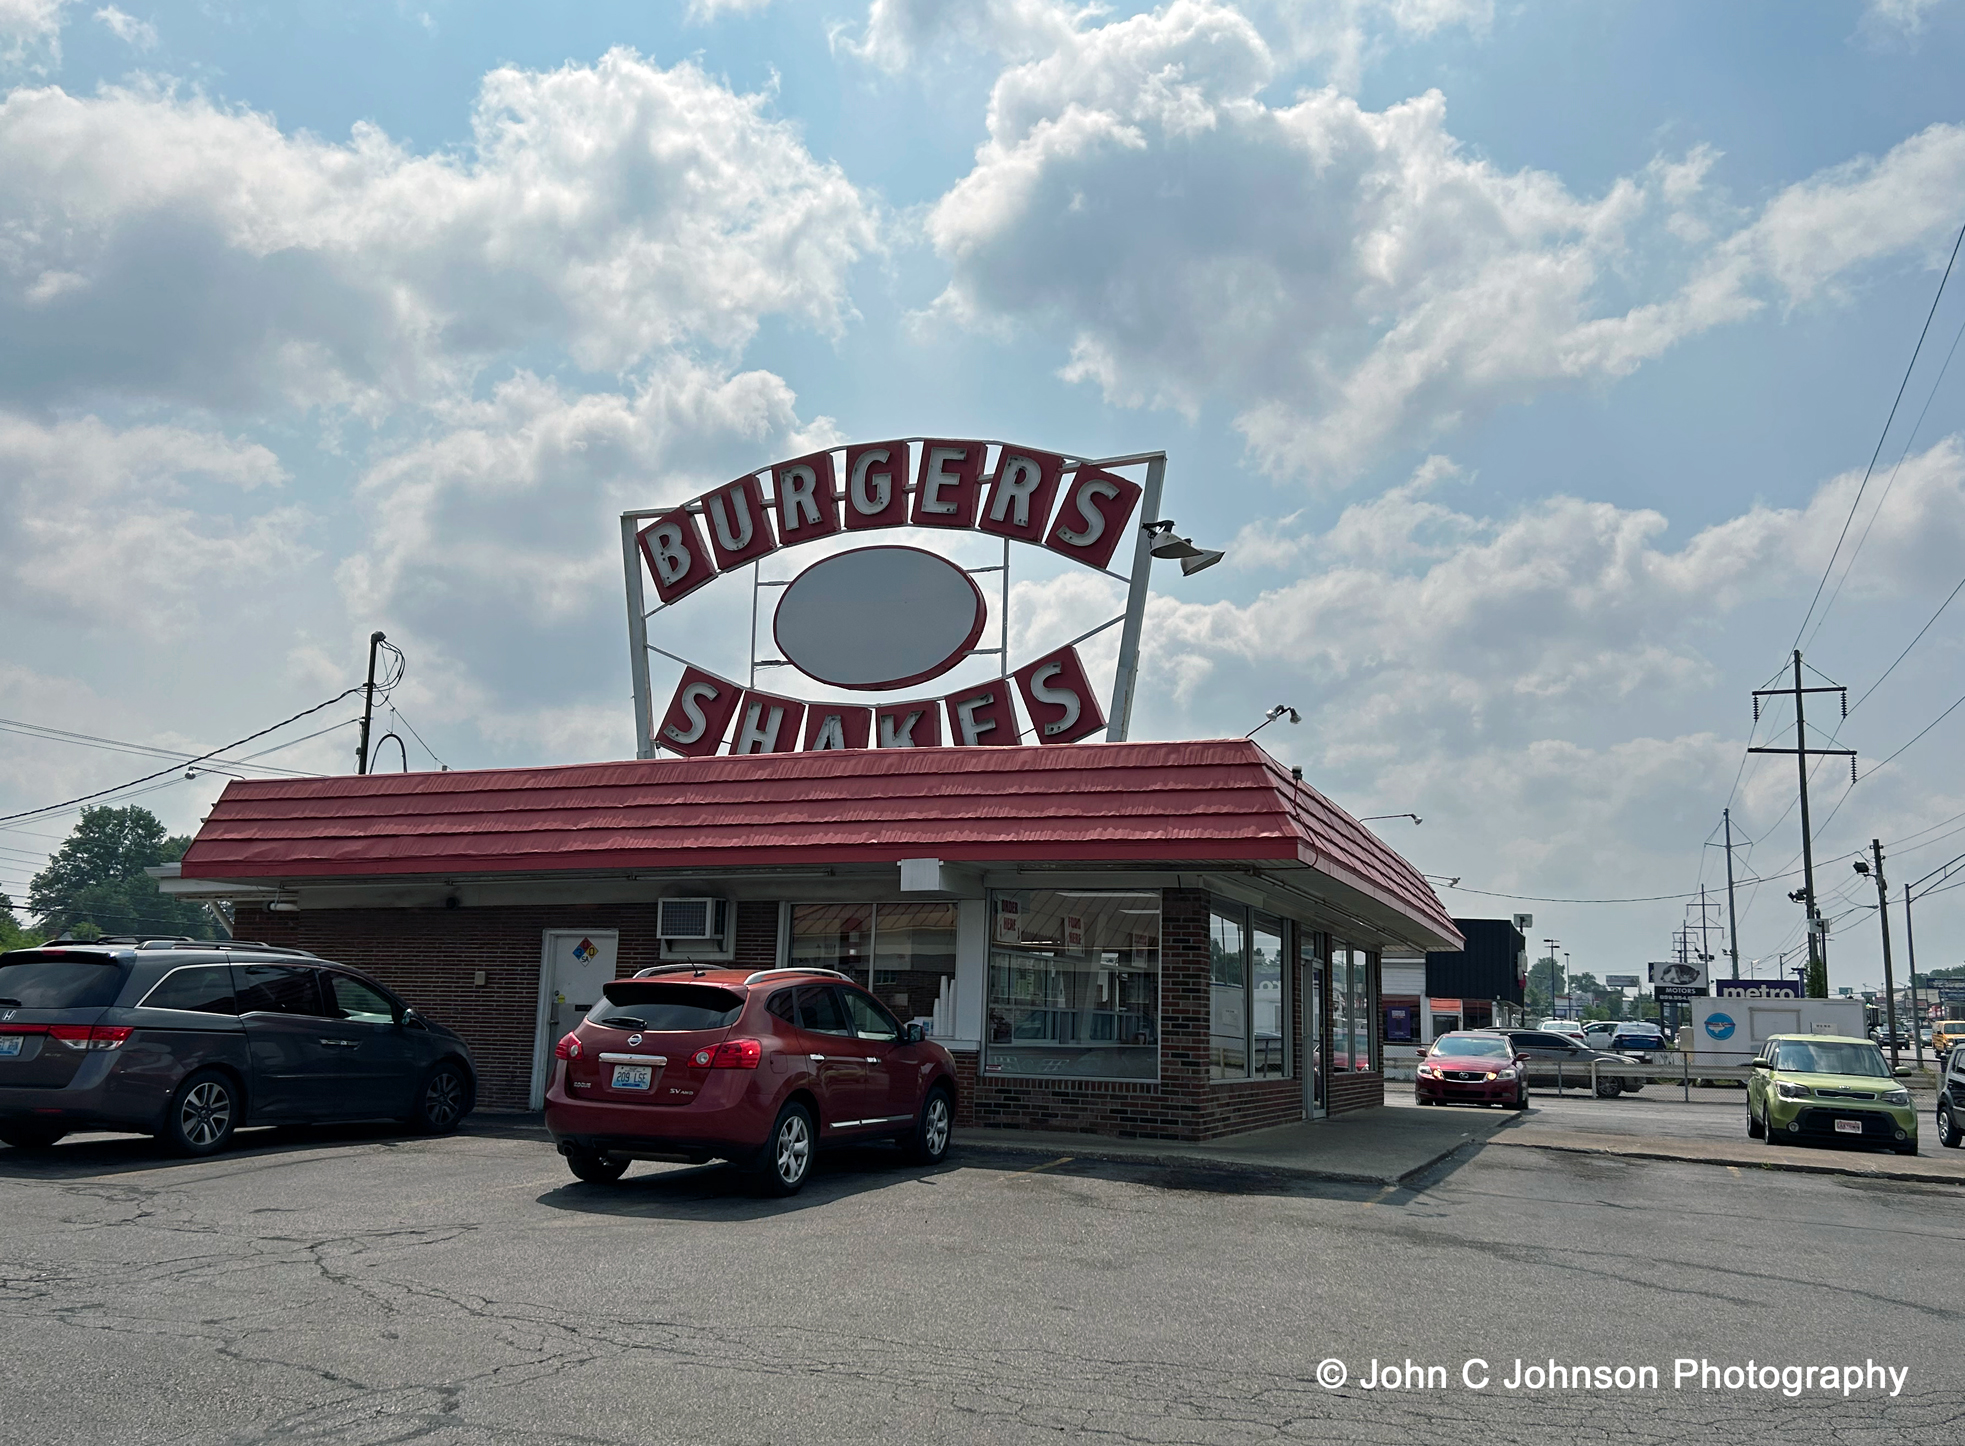 Burgers Shakes Lexington, Kentucky